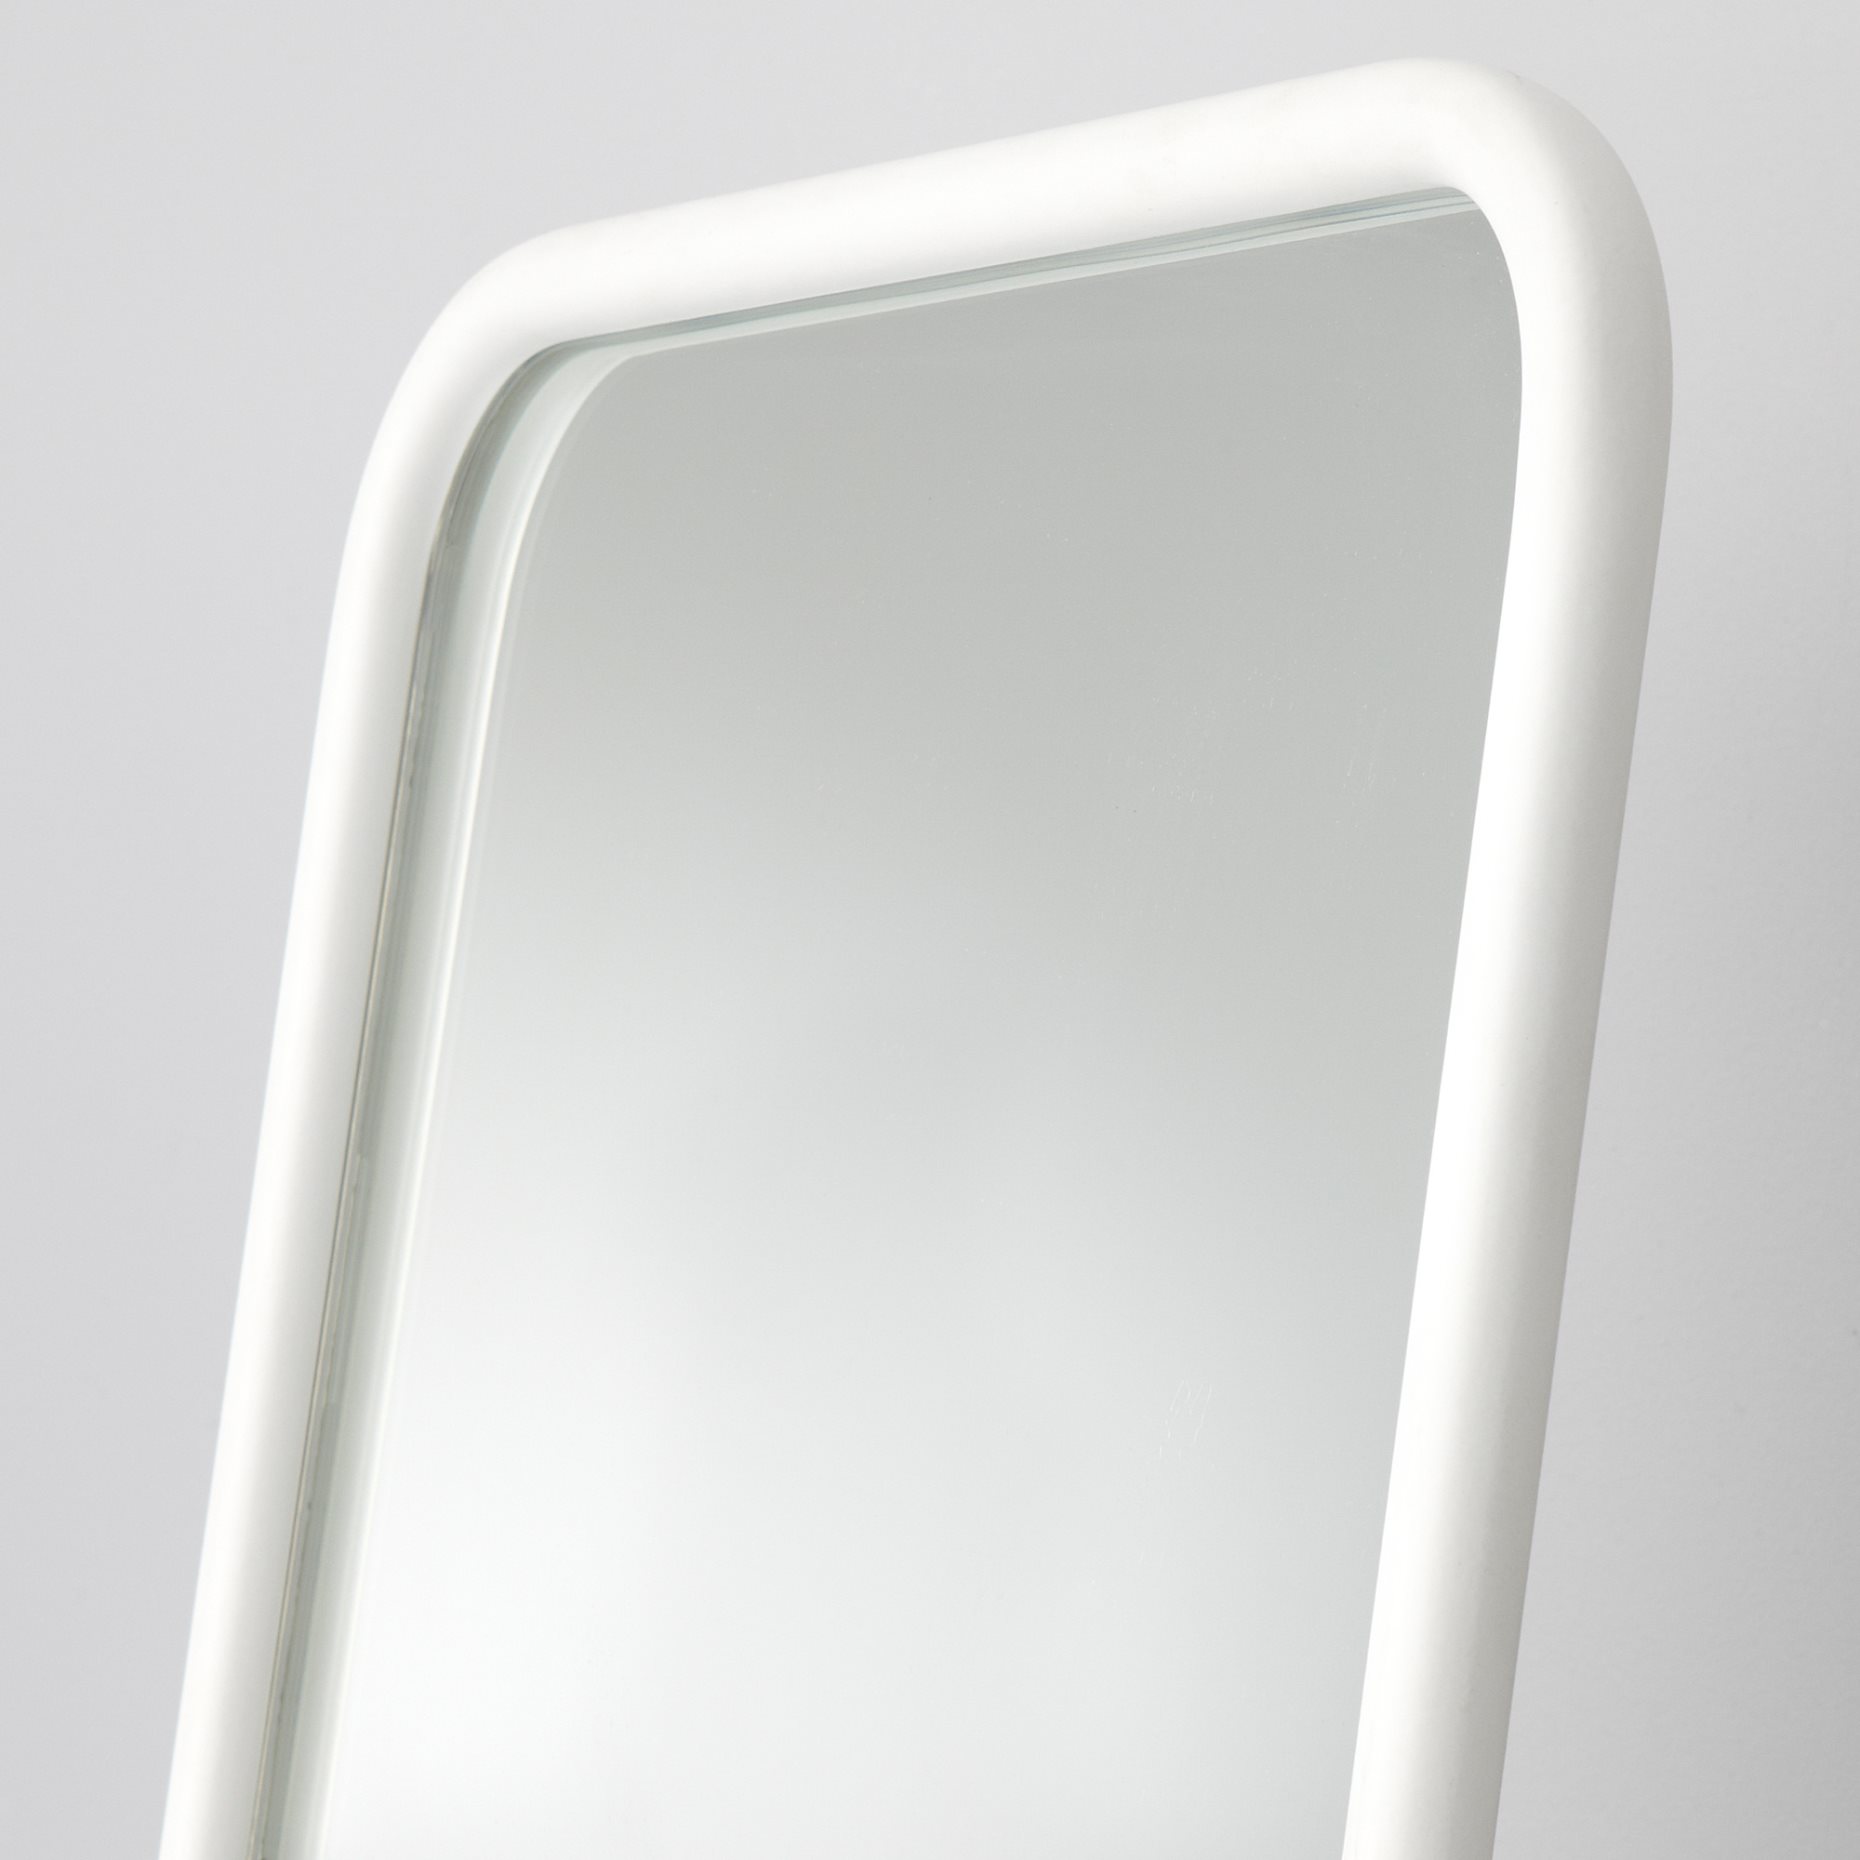 KNAPPER, standing mirror, 48x160 cm, 003.962.42